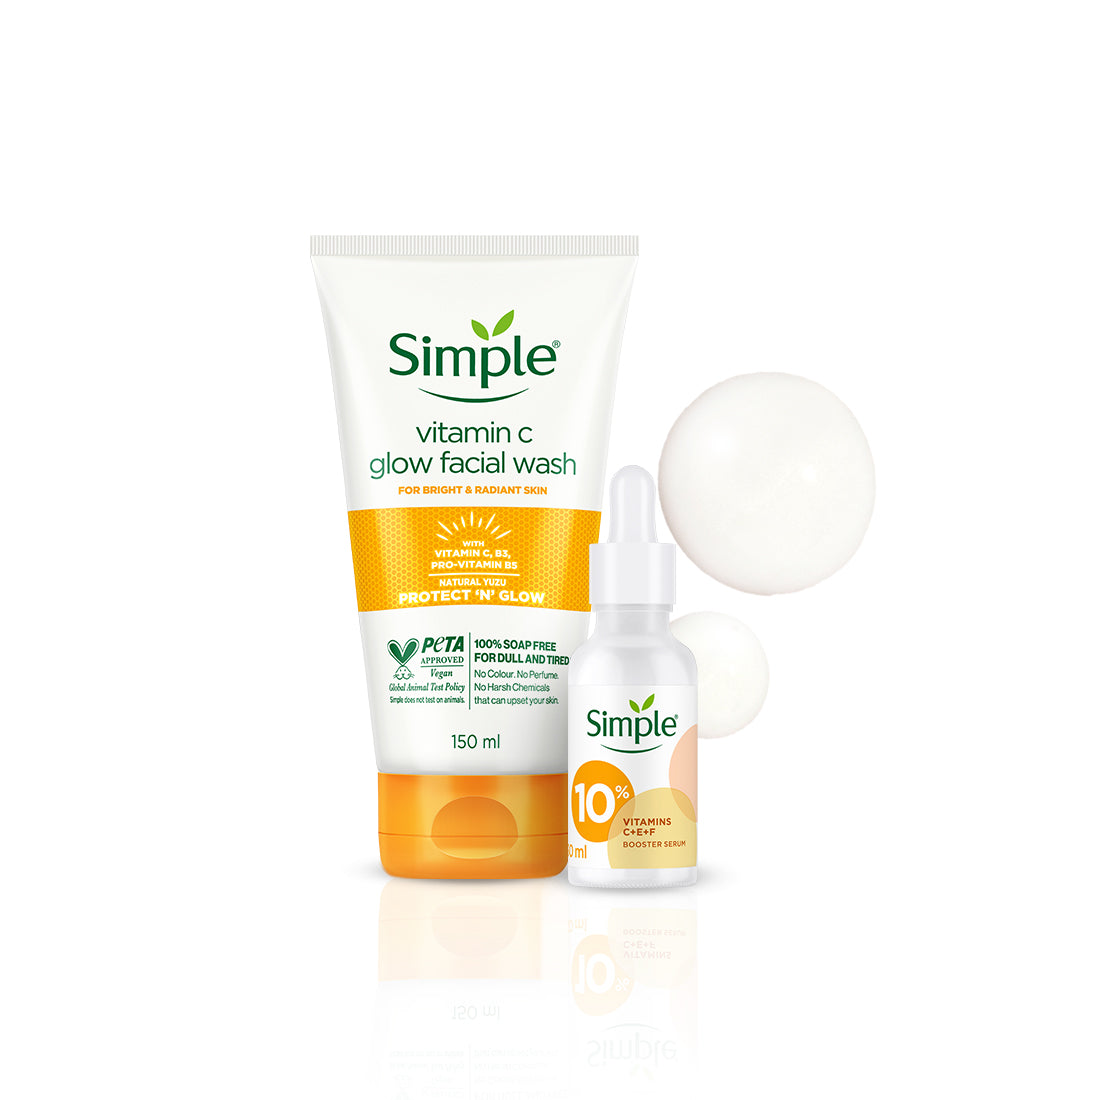 Vitamin C Glow Facial Wash + 10% Vit C Booster Serum (150ml + 30ml) 